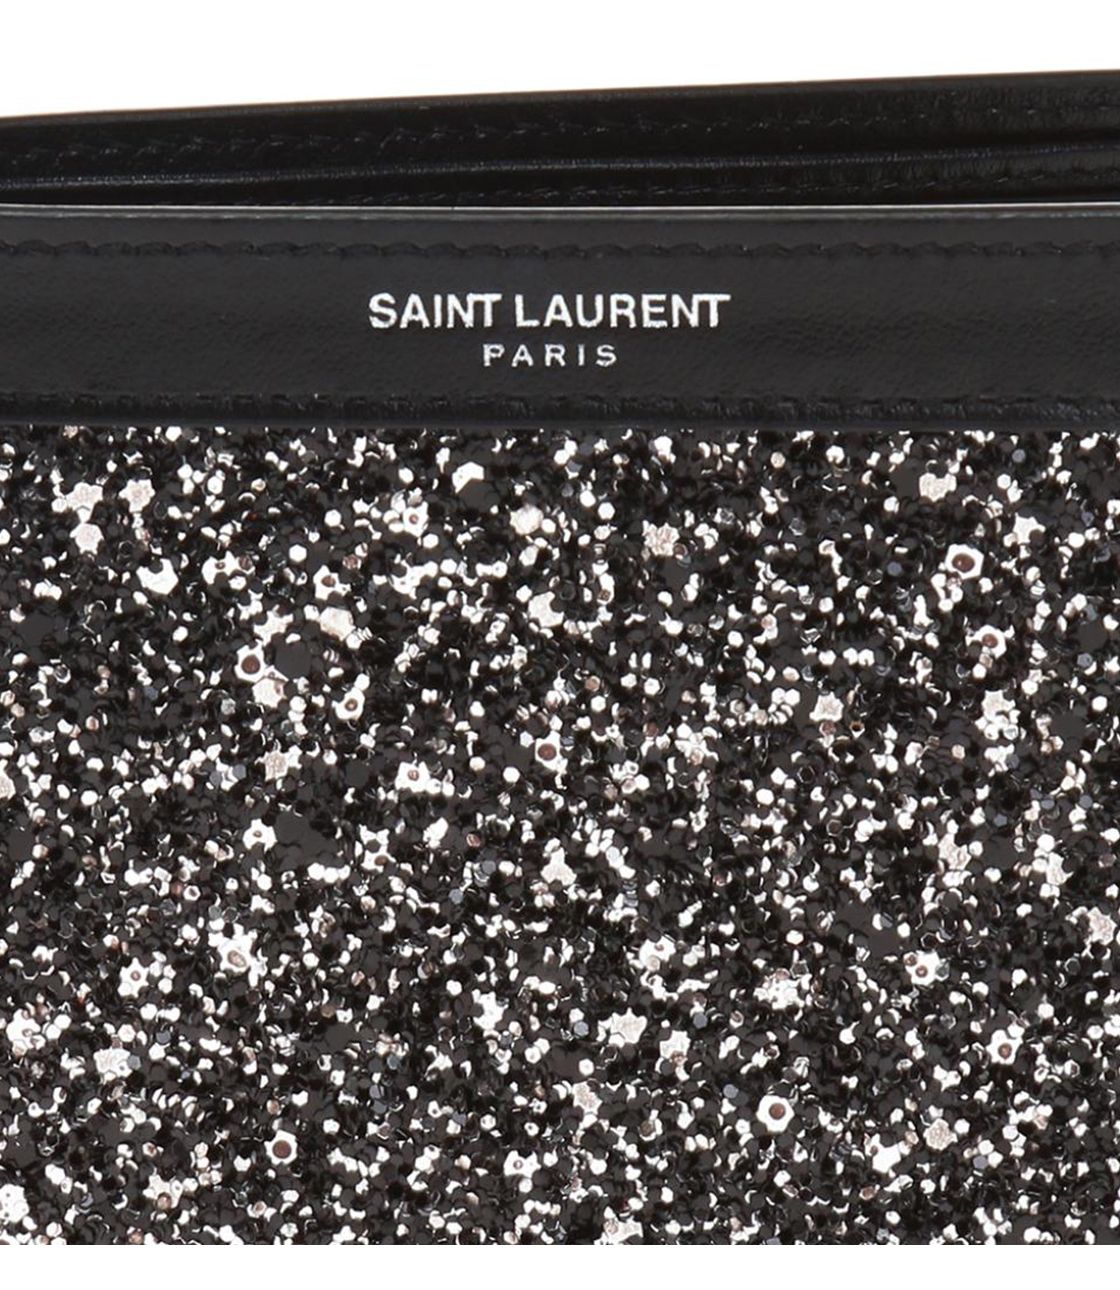 Ví Da Saint Laurent Glitter Finish